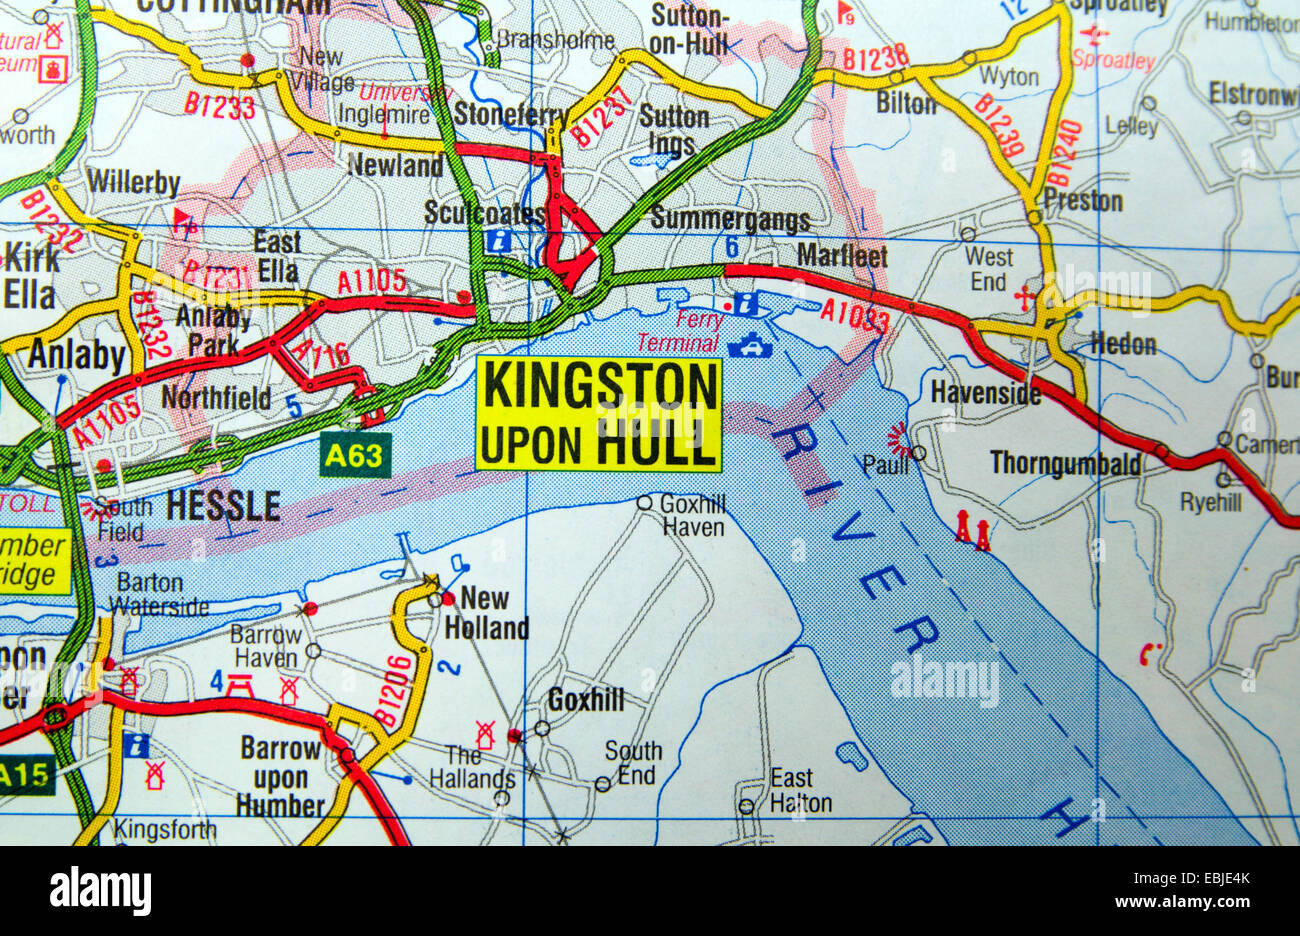 Road Map of Kingston Upon Hull, England Stock Photo: 76008931 - Alamy